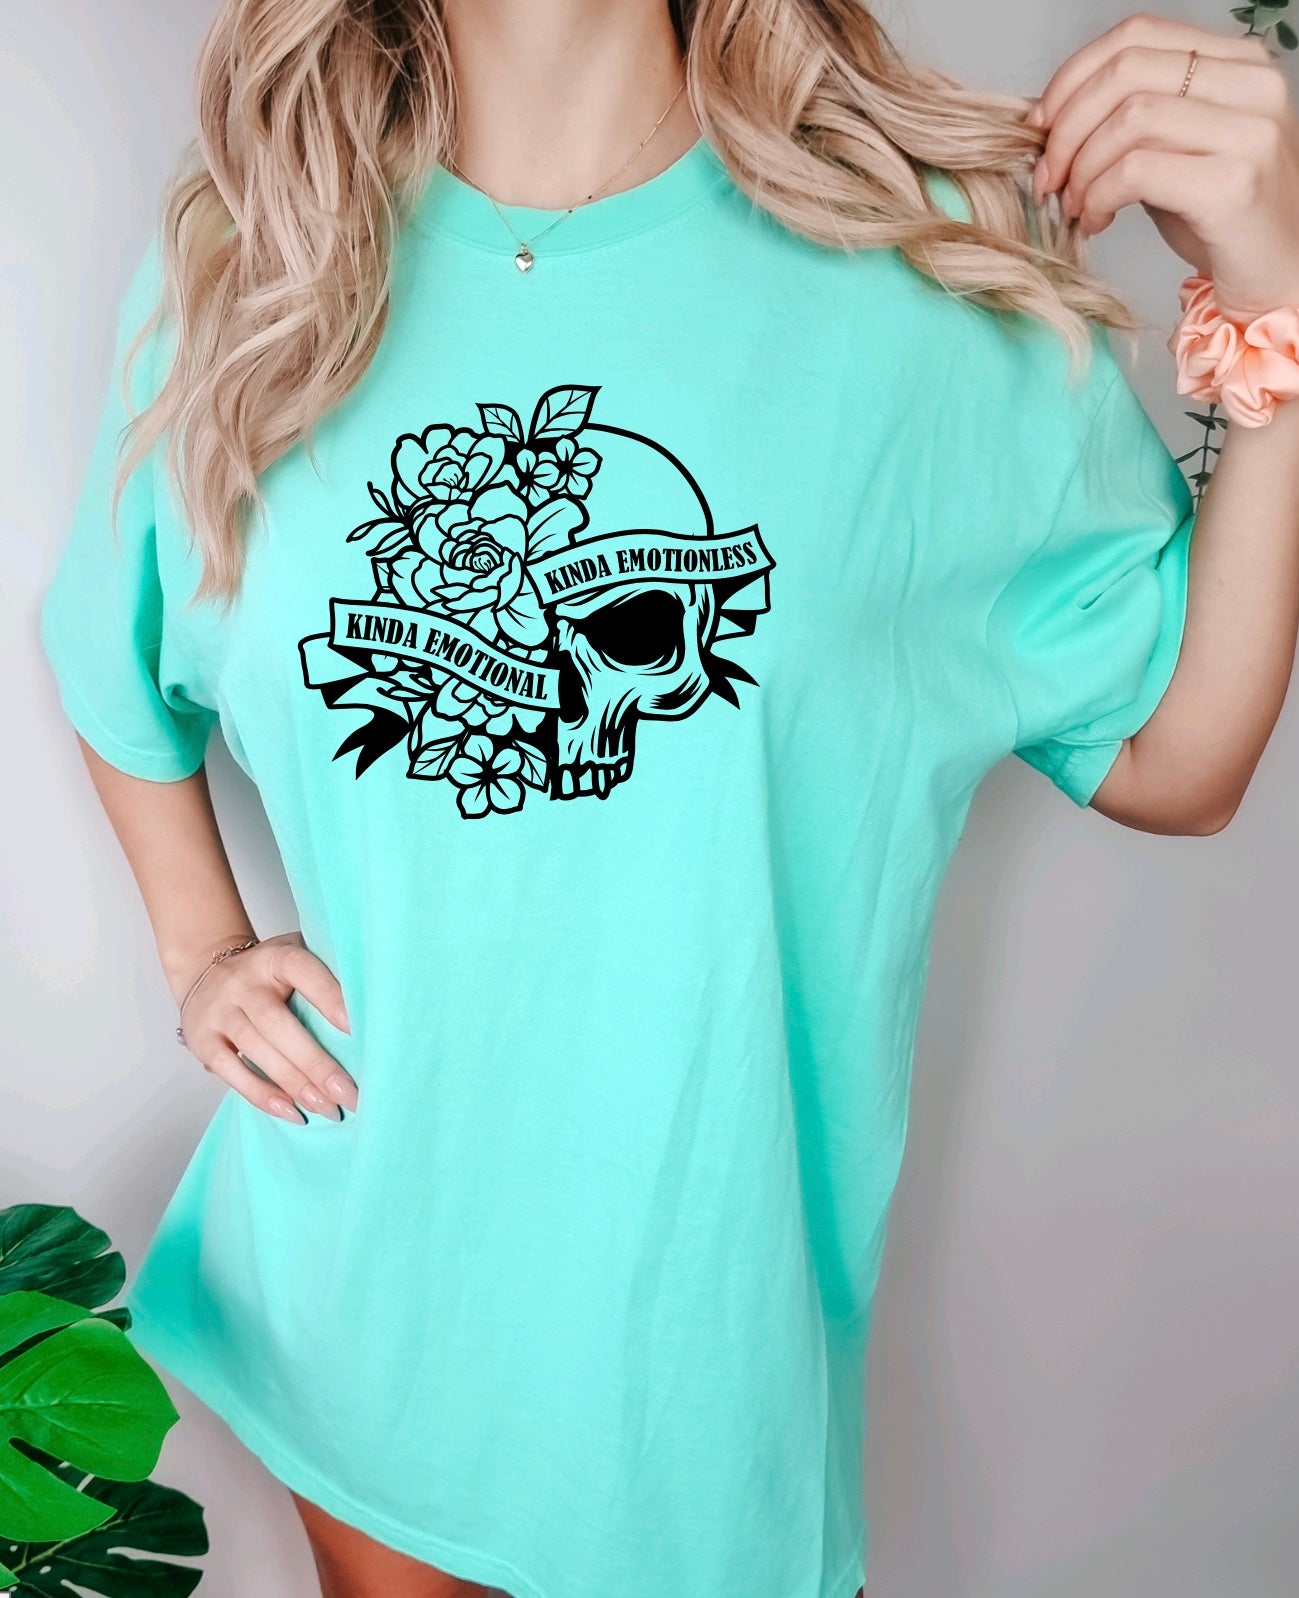 Kinda emotional kinda emotionless comfort colors unisex t-shirt for women in island reef